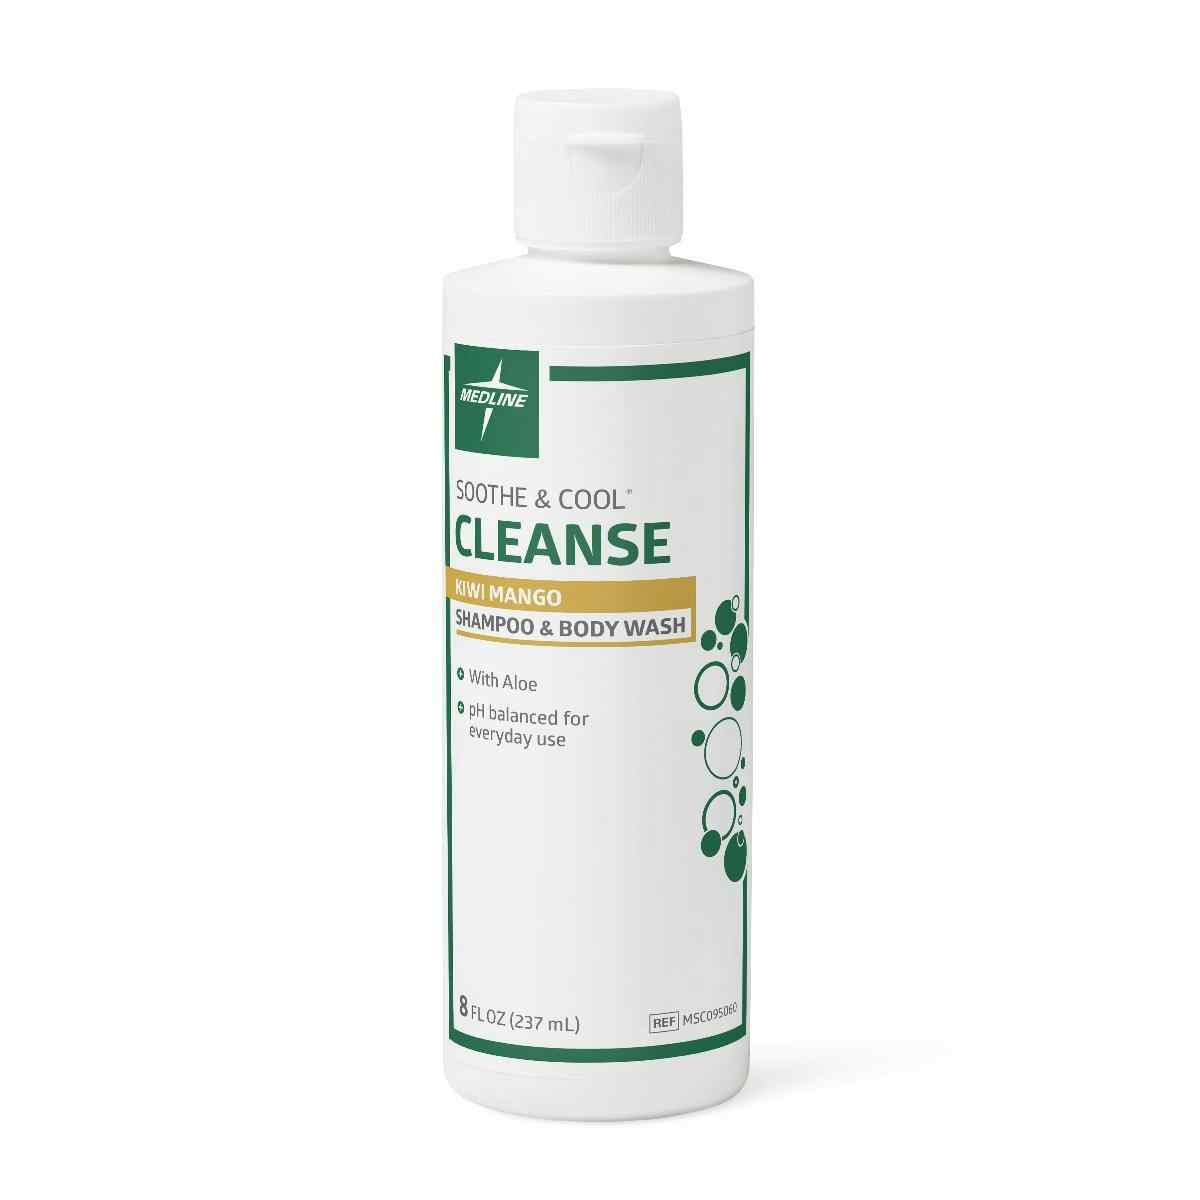 Medline Sooth & Cool Cleanse Shampoo & Body Wash, MSC095062, 1 gal - Kiwi Mango Scent - Case of 4